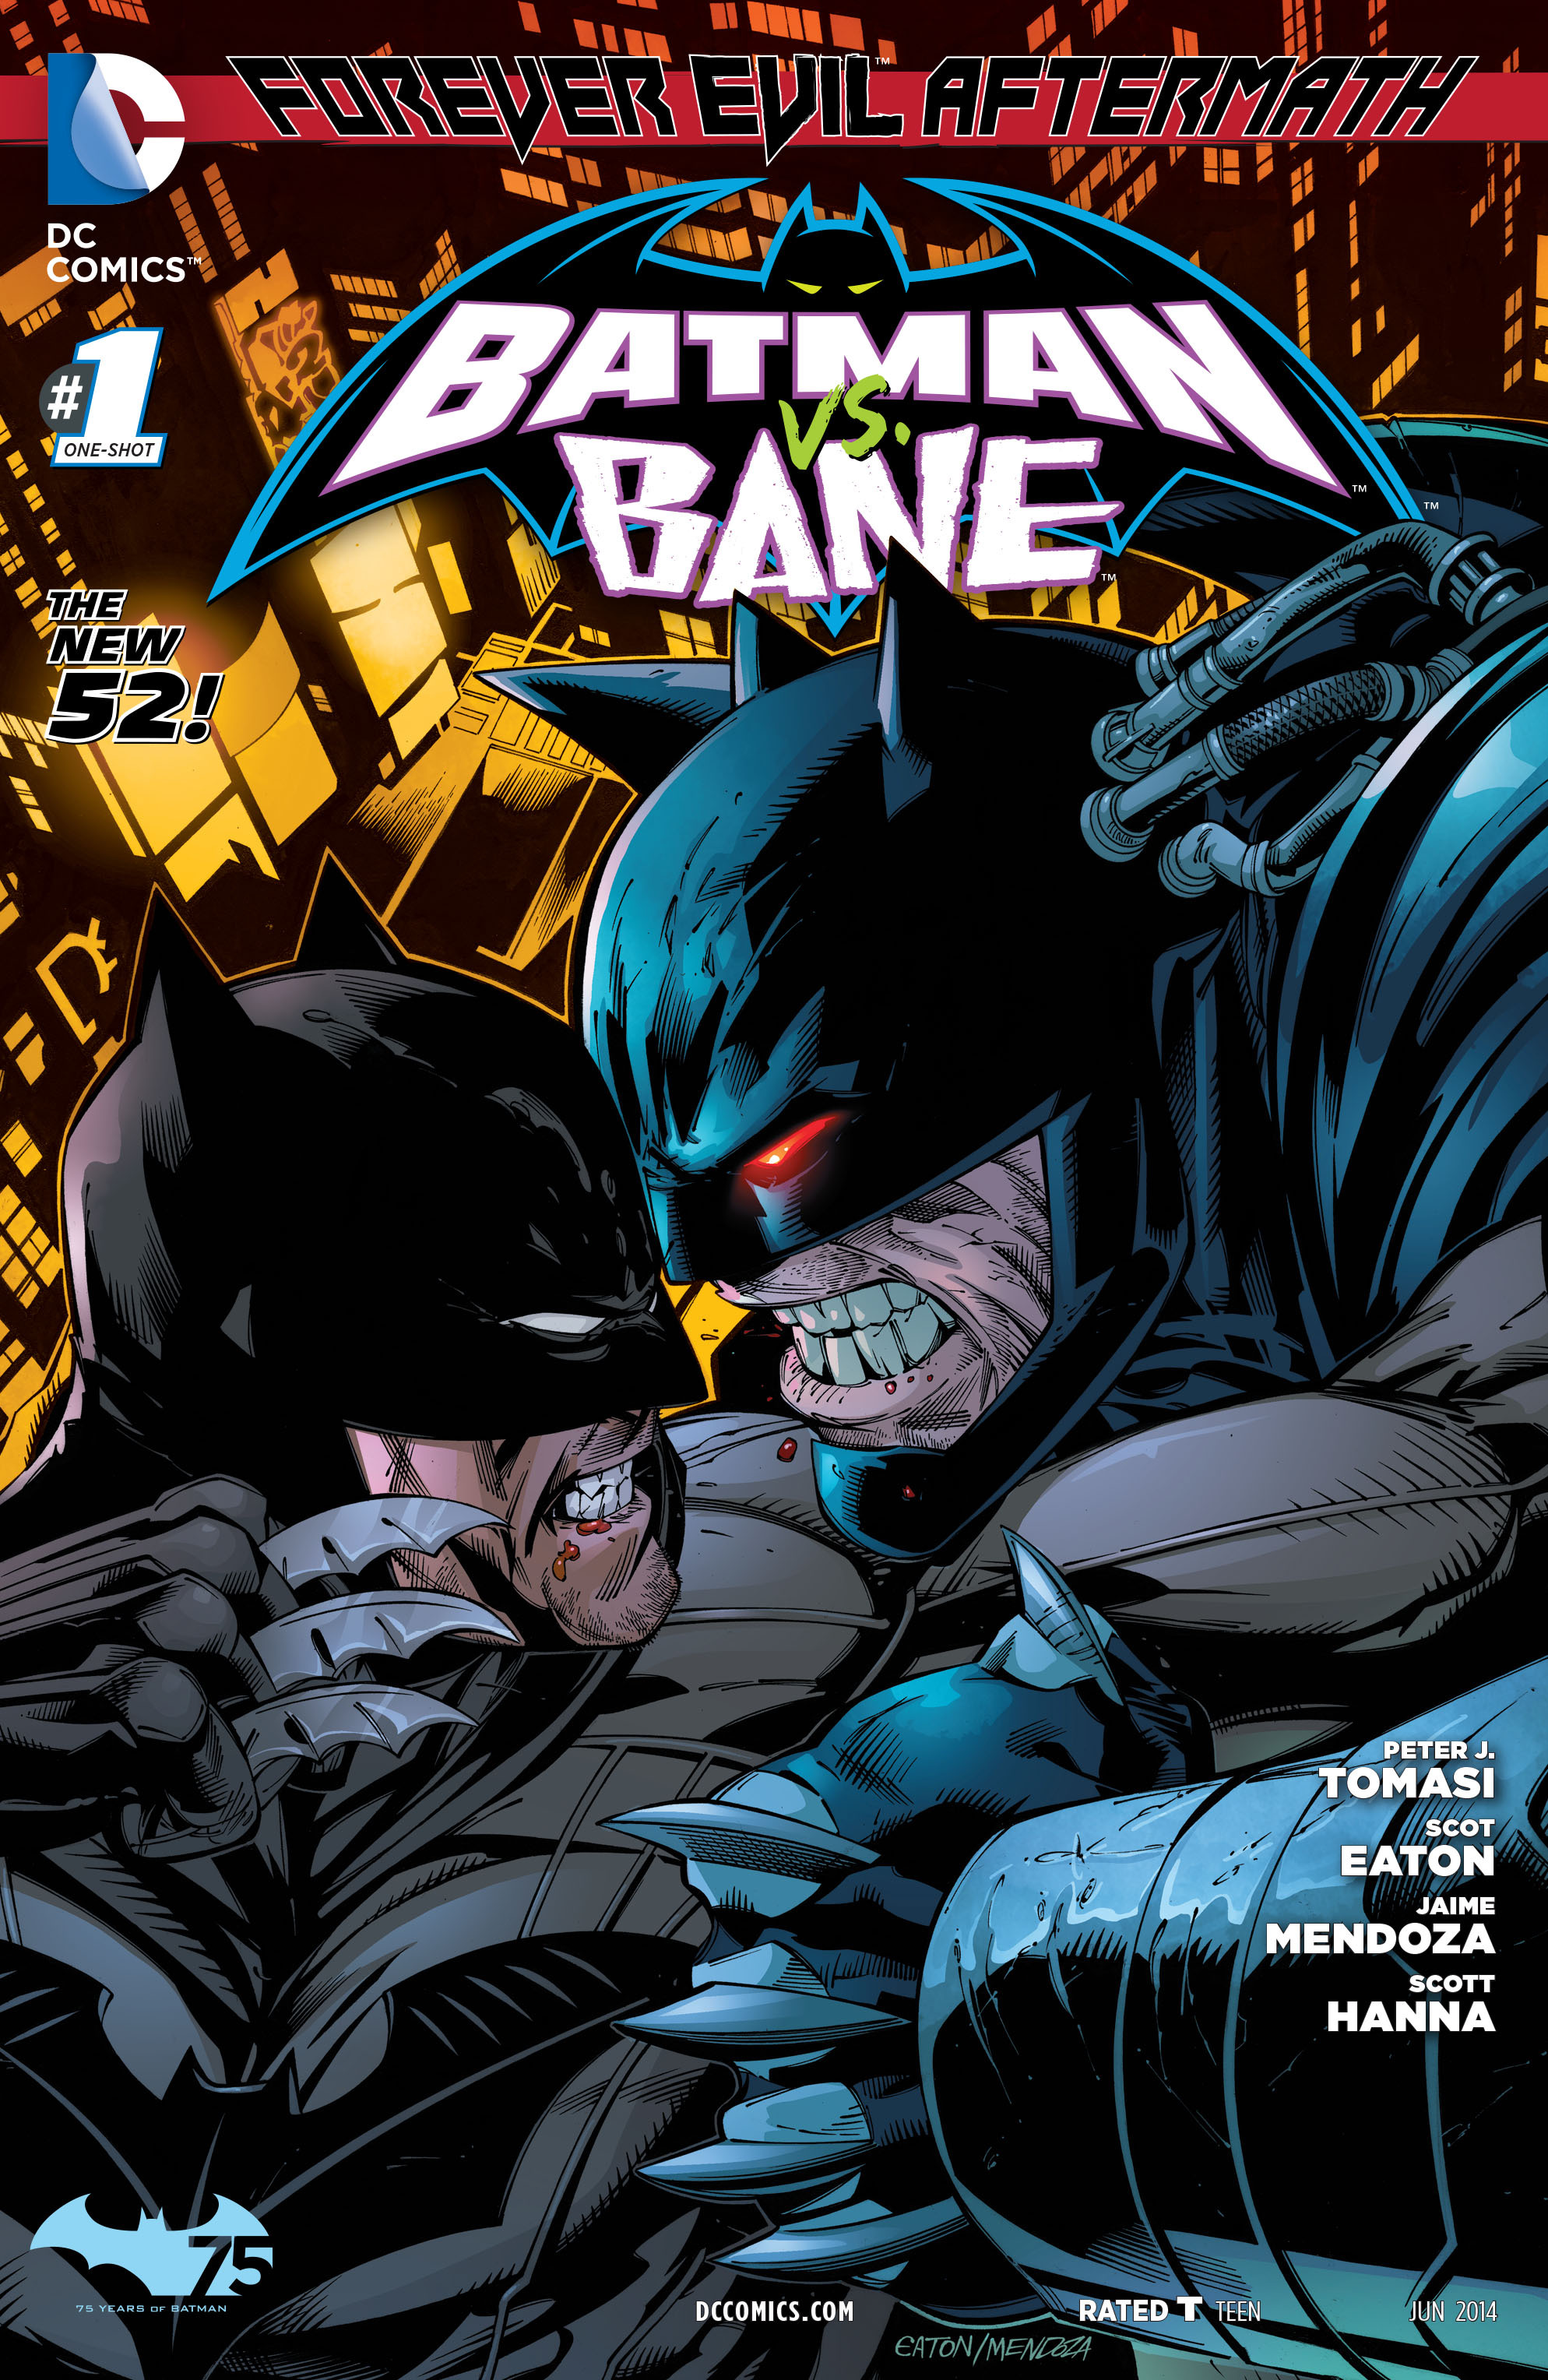 Read online Forever Evil Aftermath: Batman vs. Bane comic -  Issue # Full - 1